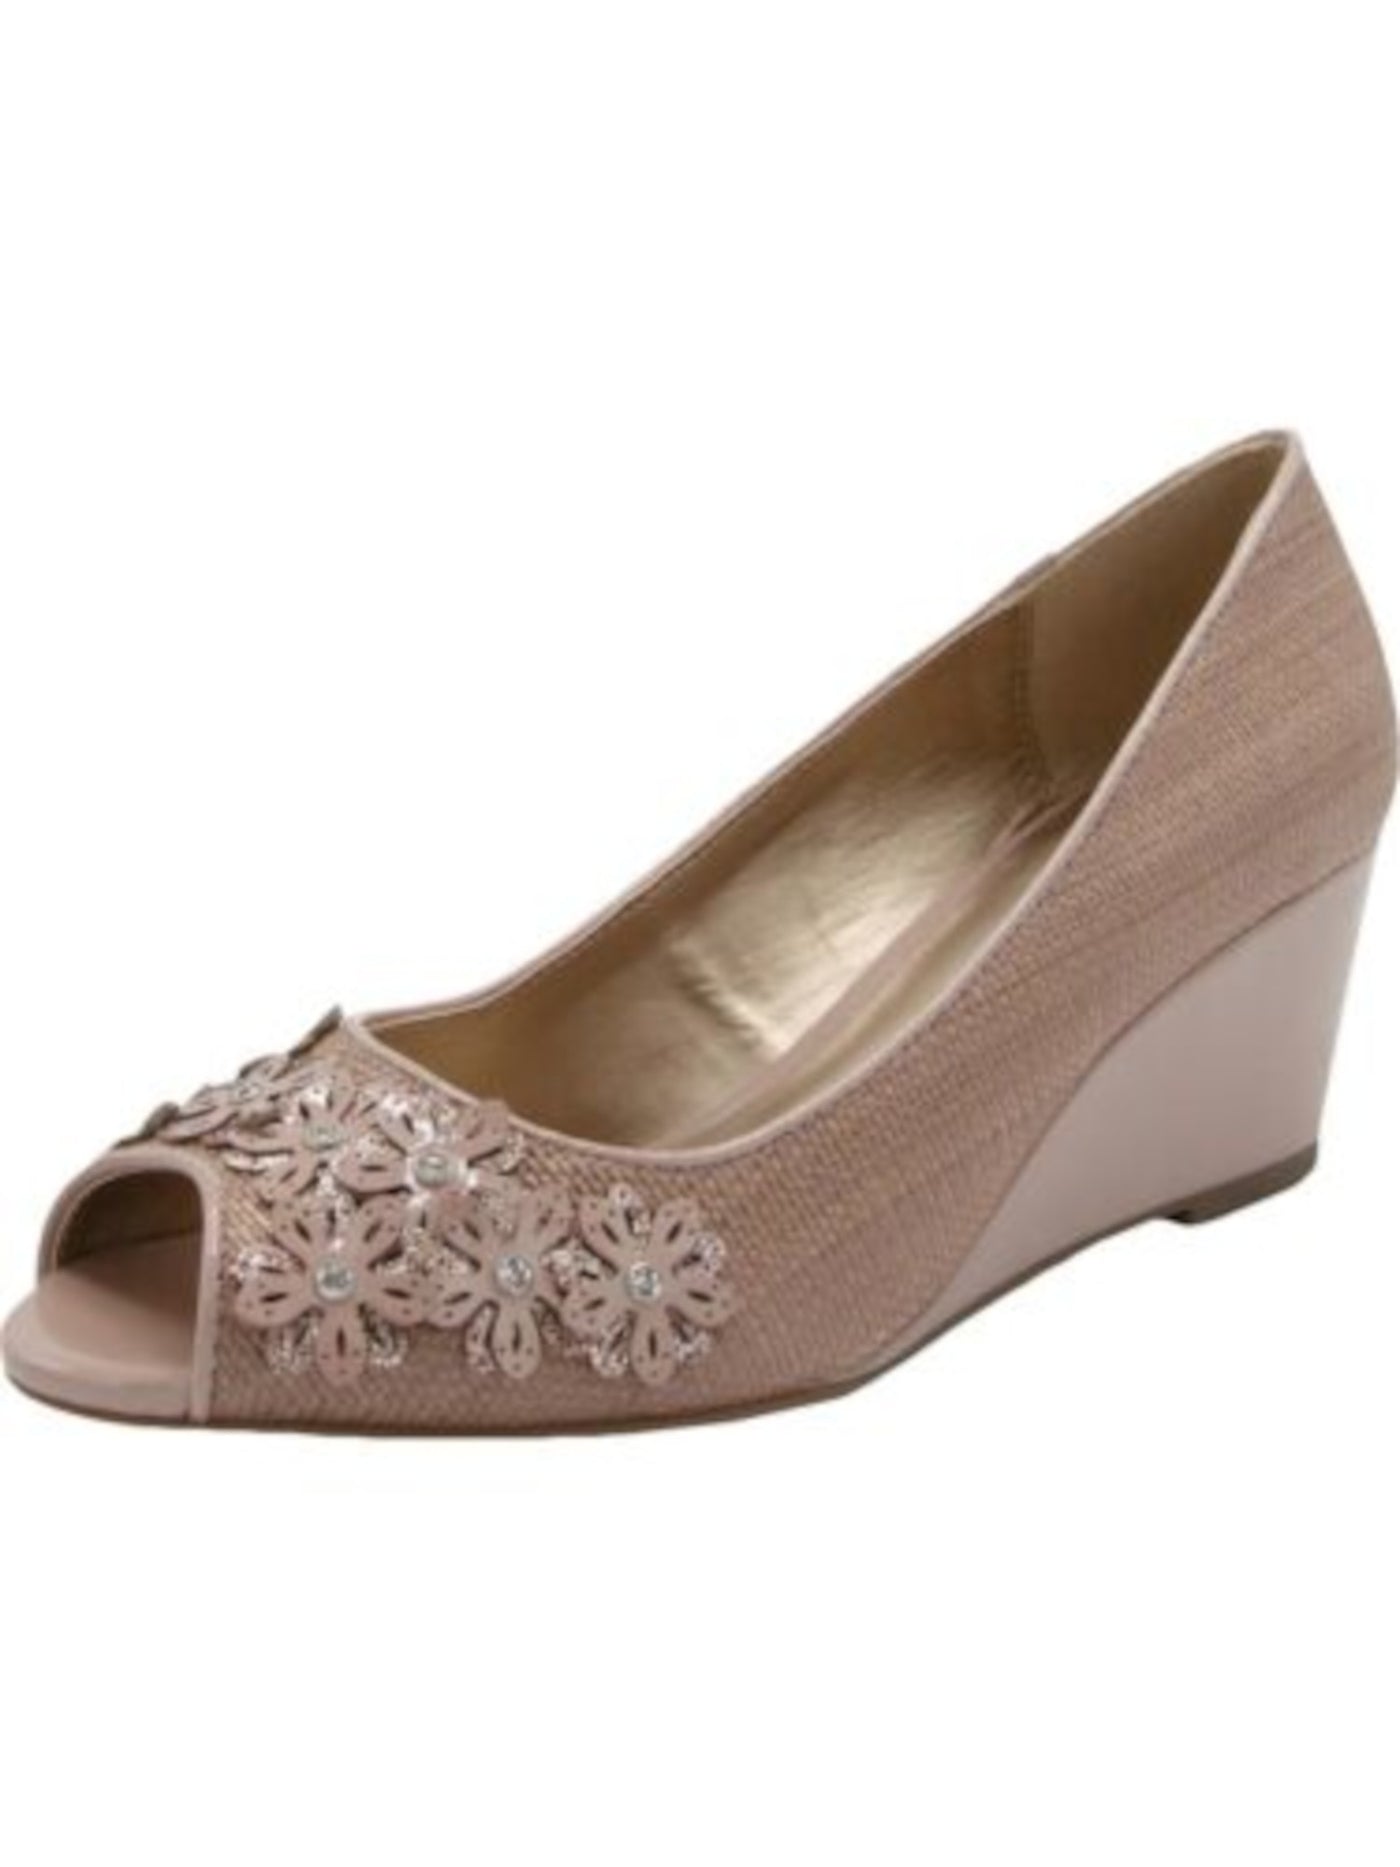 KAREN SCOTT Womens Beige Woven Pattern Floral Accents Padded Comfort Rhinestone Coraa Peep Toe Wedge Slip On Sandals Shoes 11 M